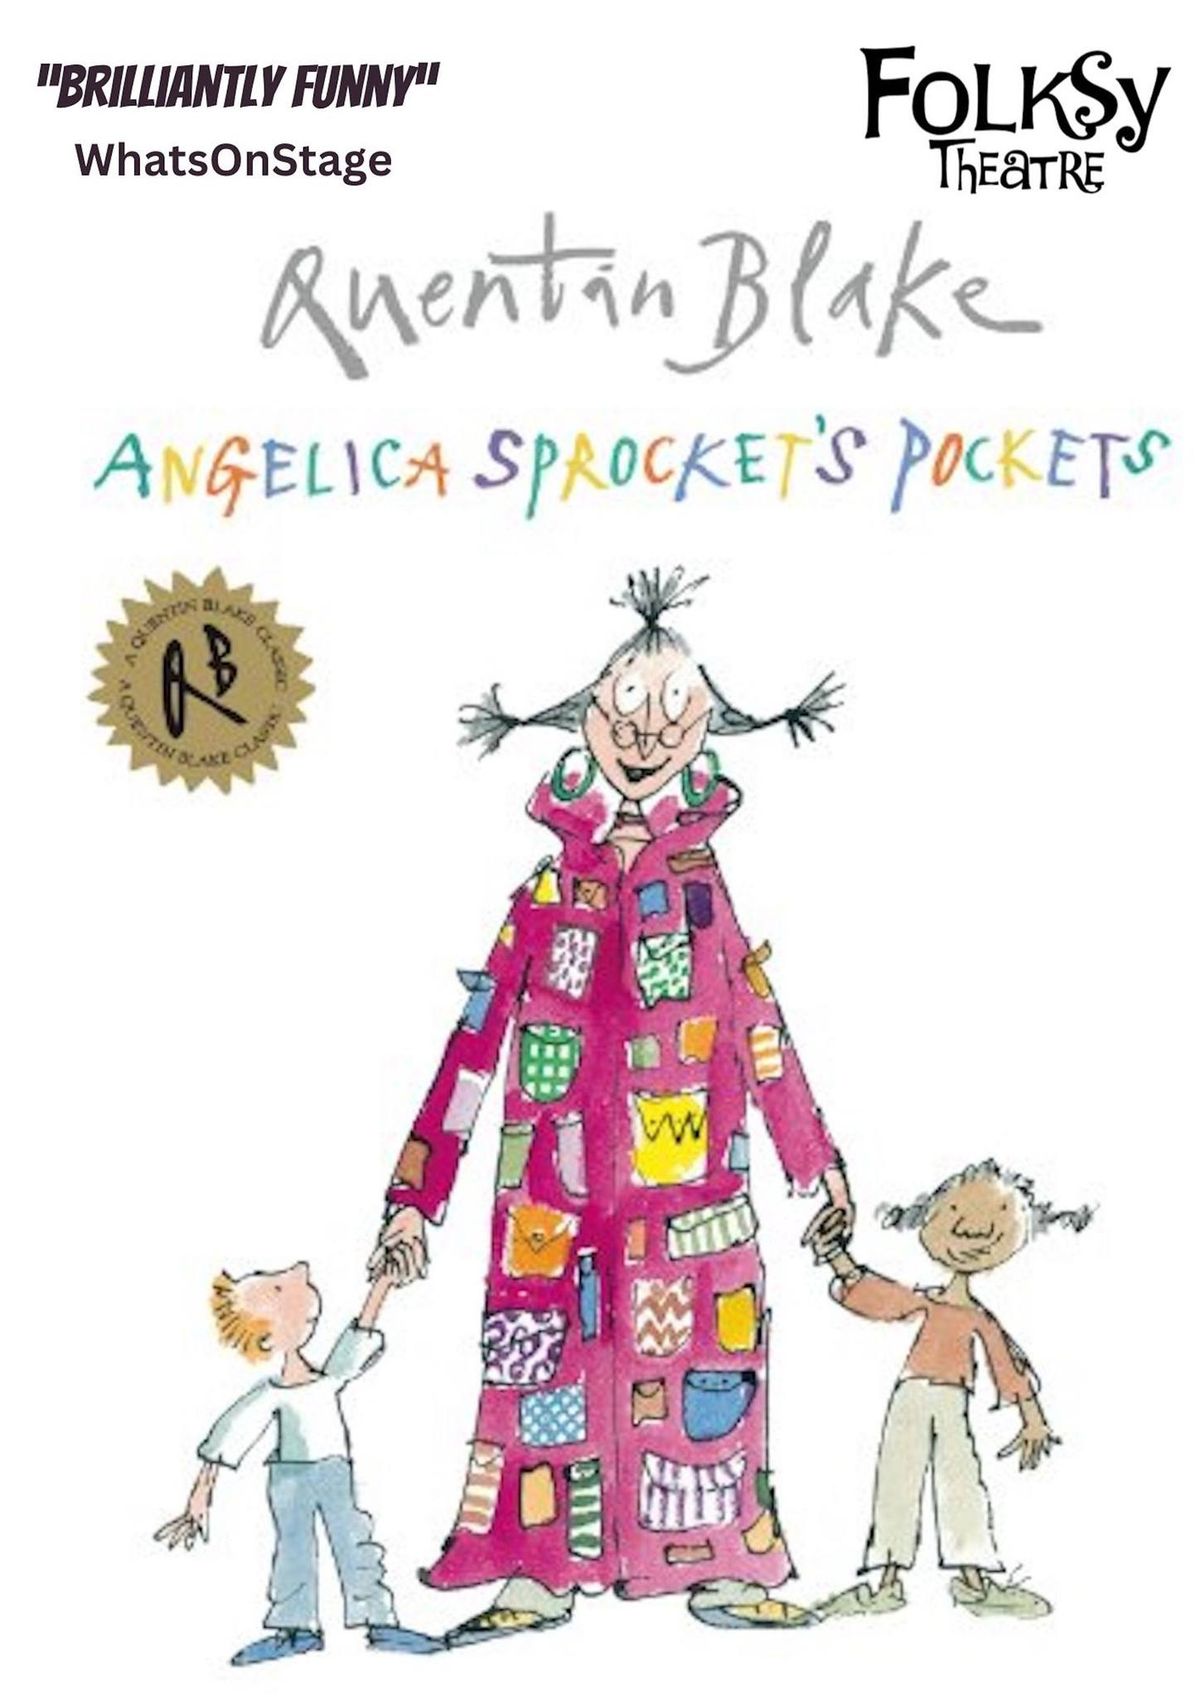 Angelica Sprocket's Pockets